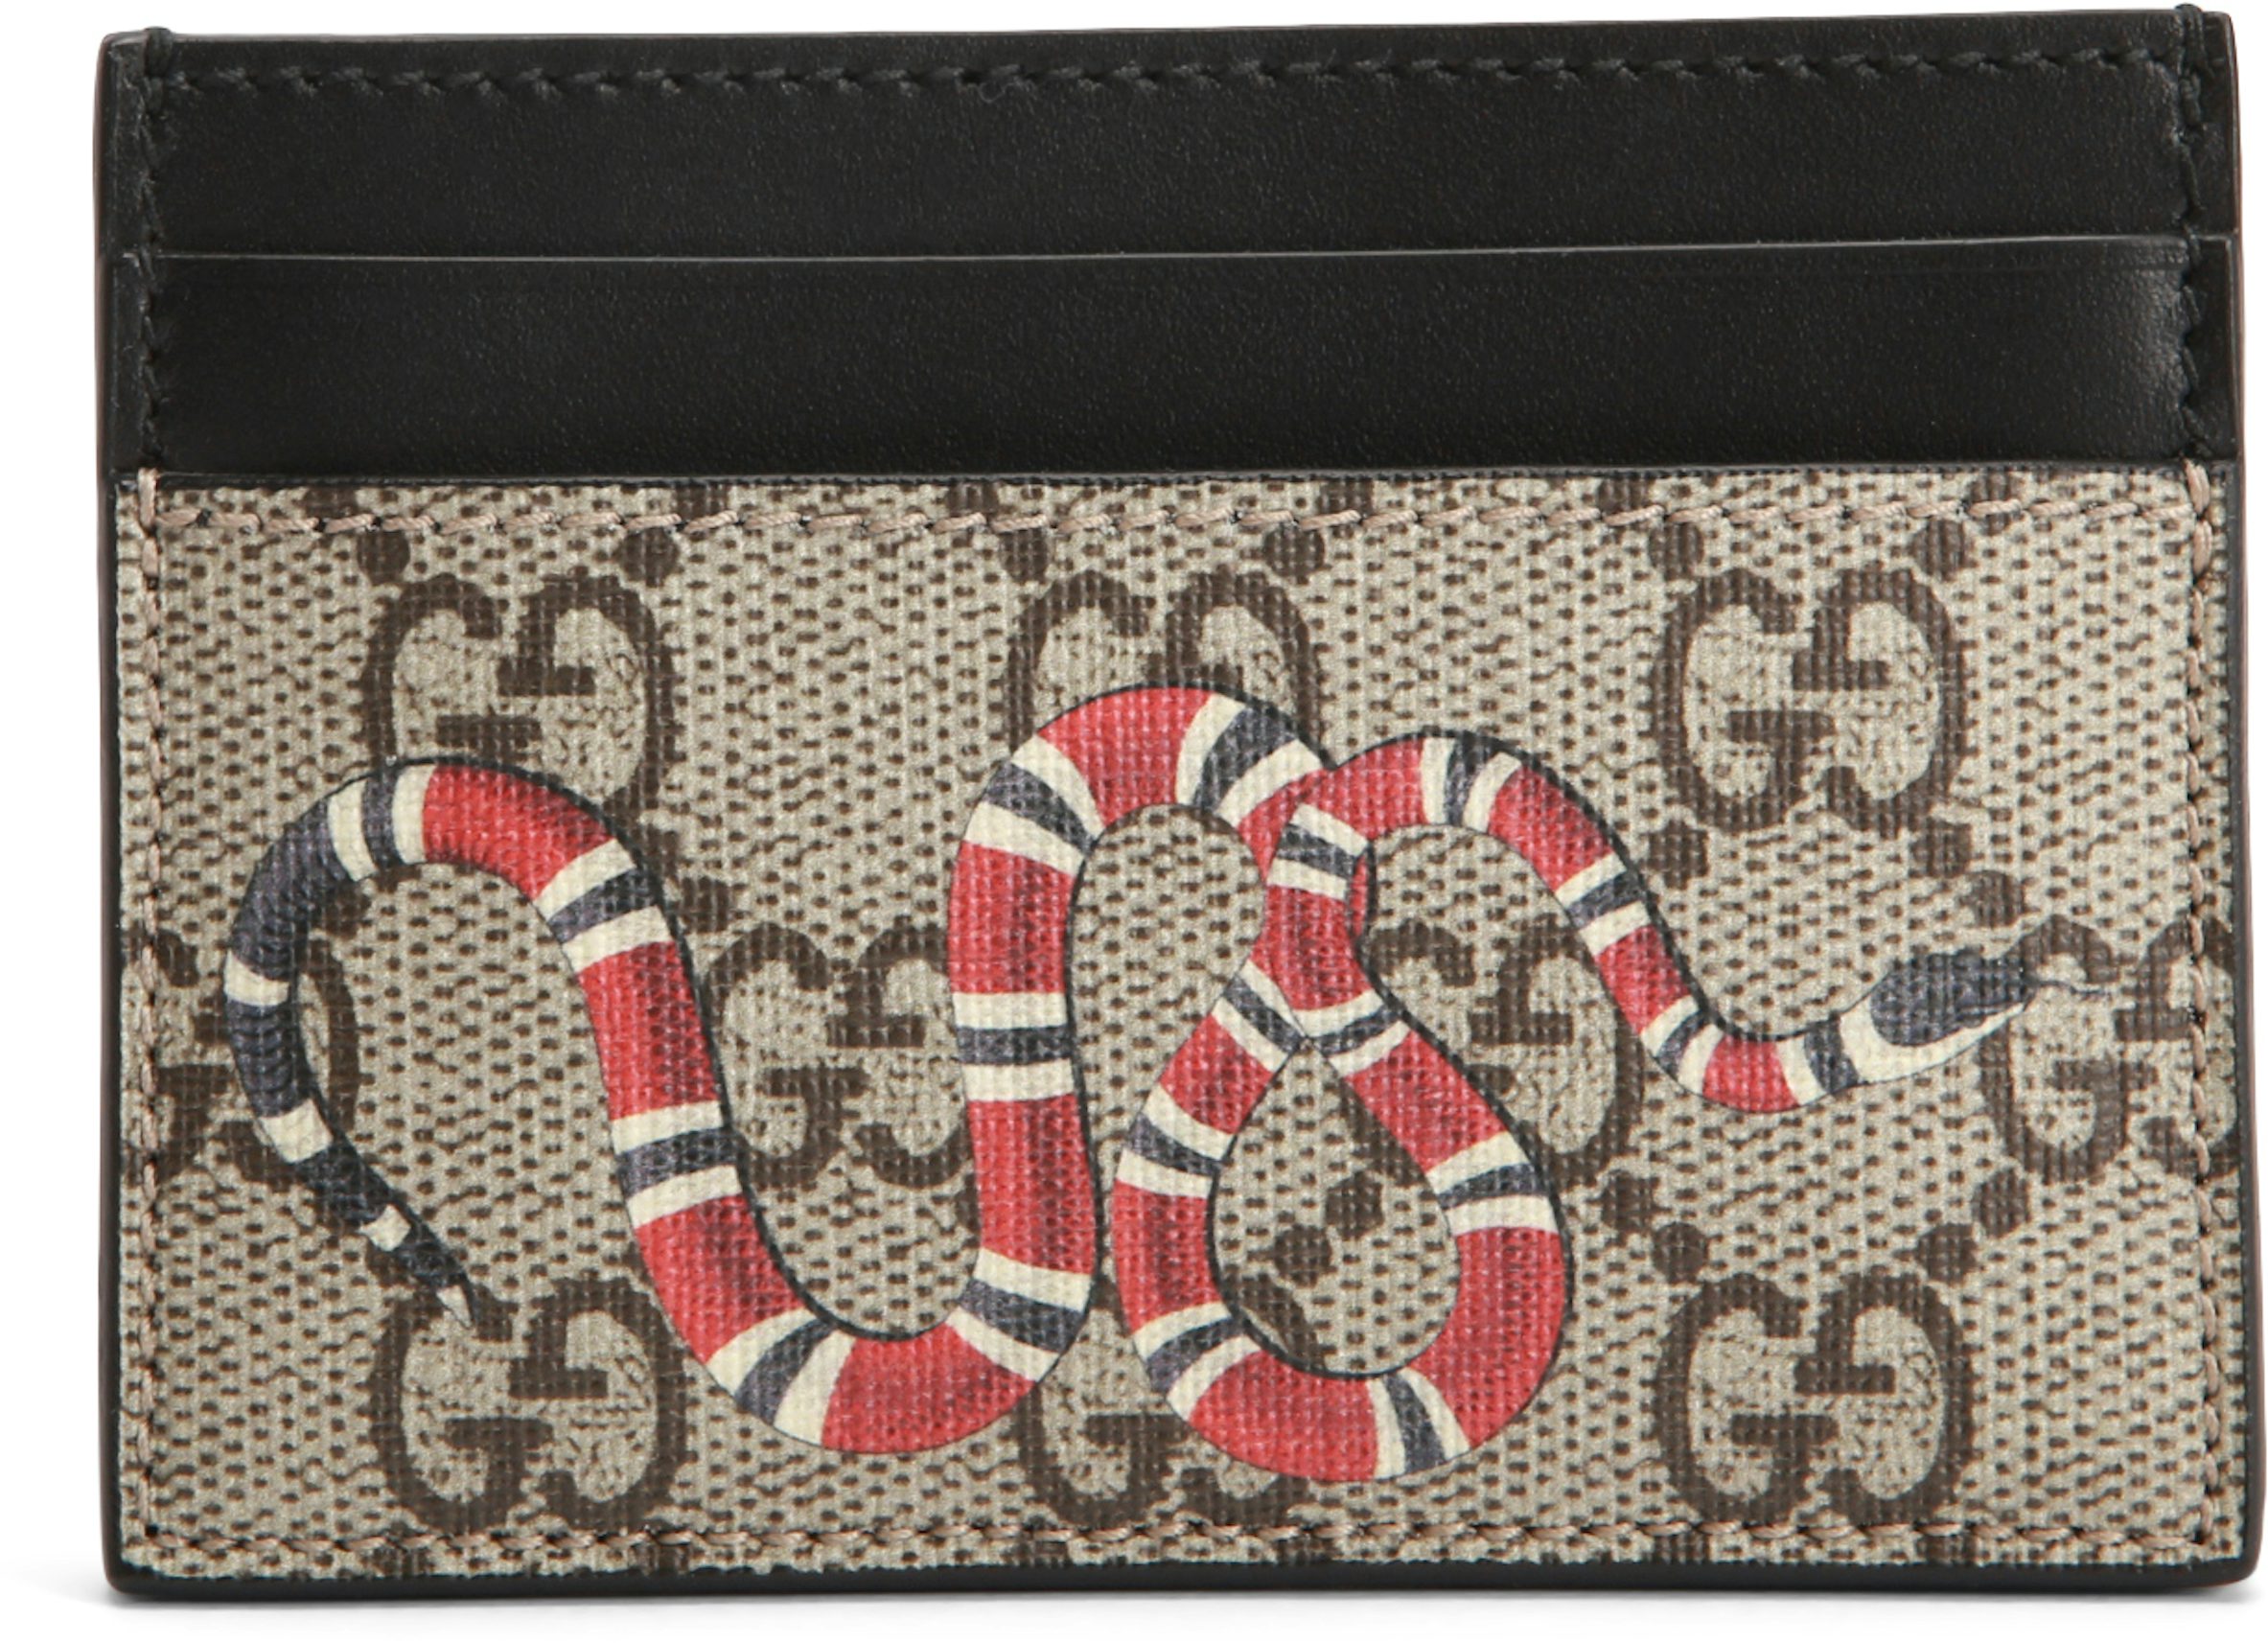 Gucci Wallet / Gucci snake wallet